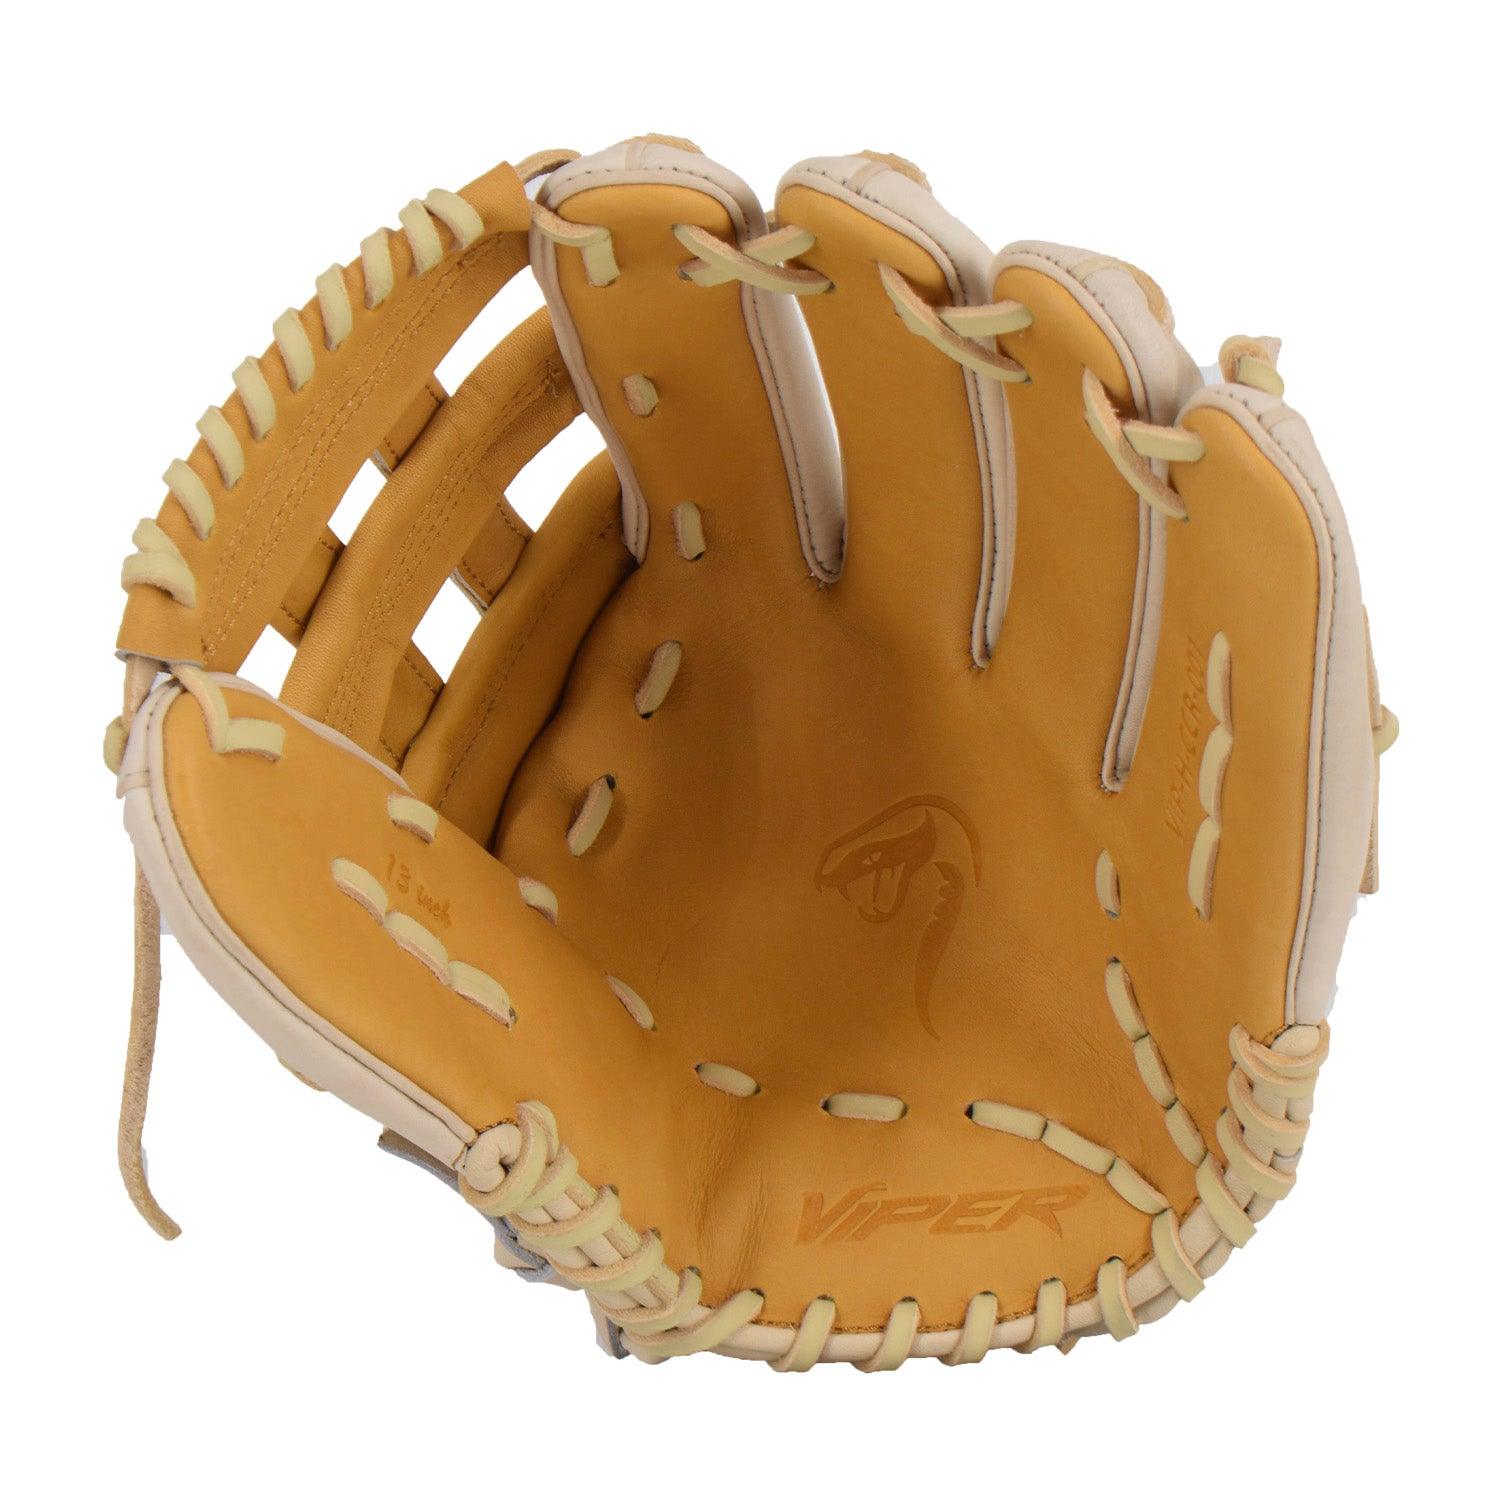 Viper Premium Leather Slowpitch Softball Fielding Glove  VIP-H-CCR-001